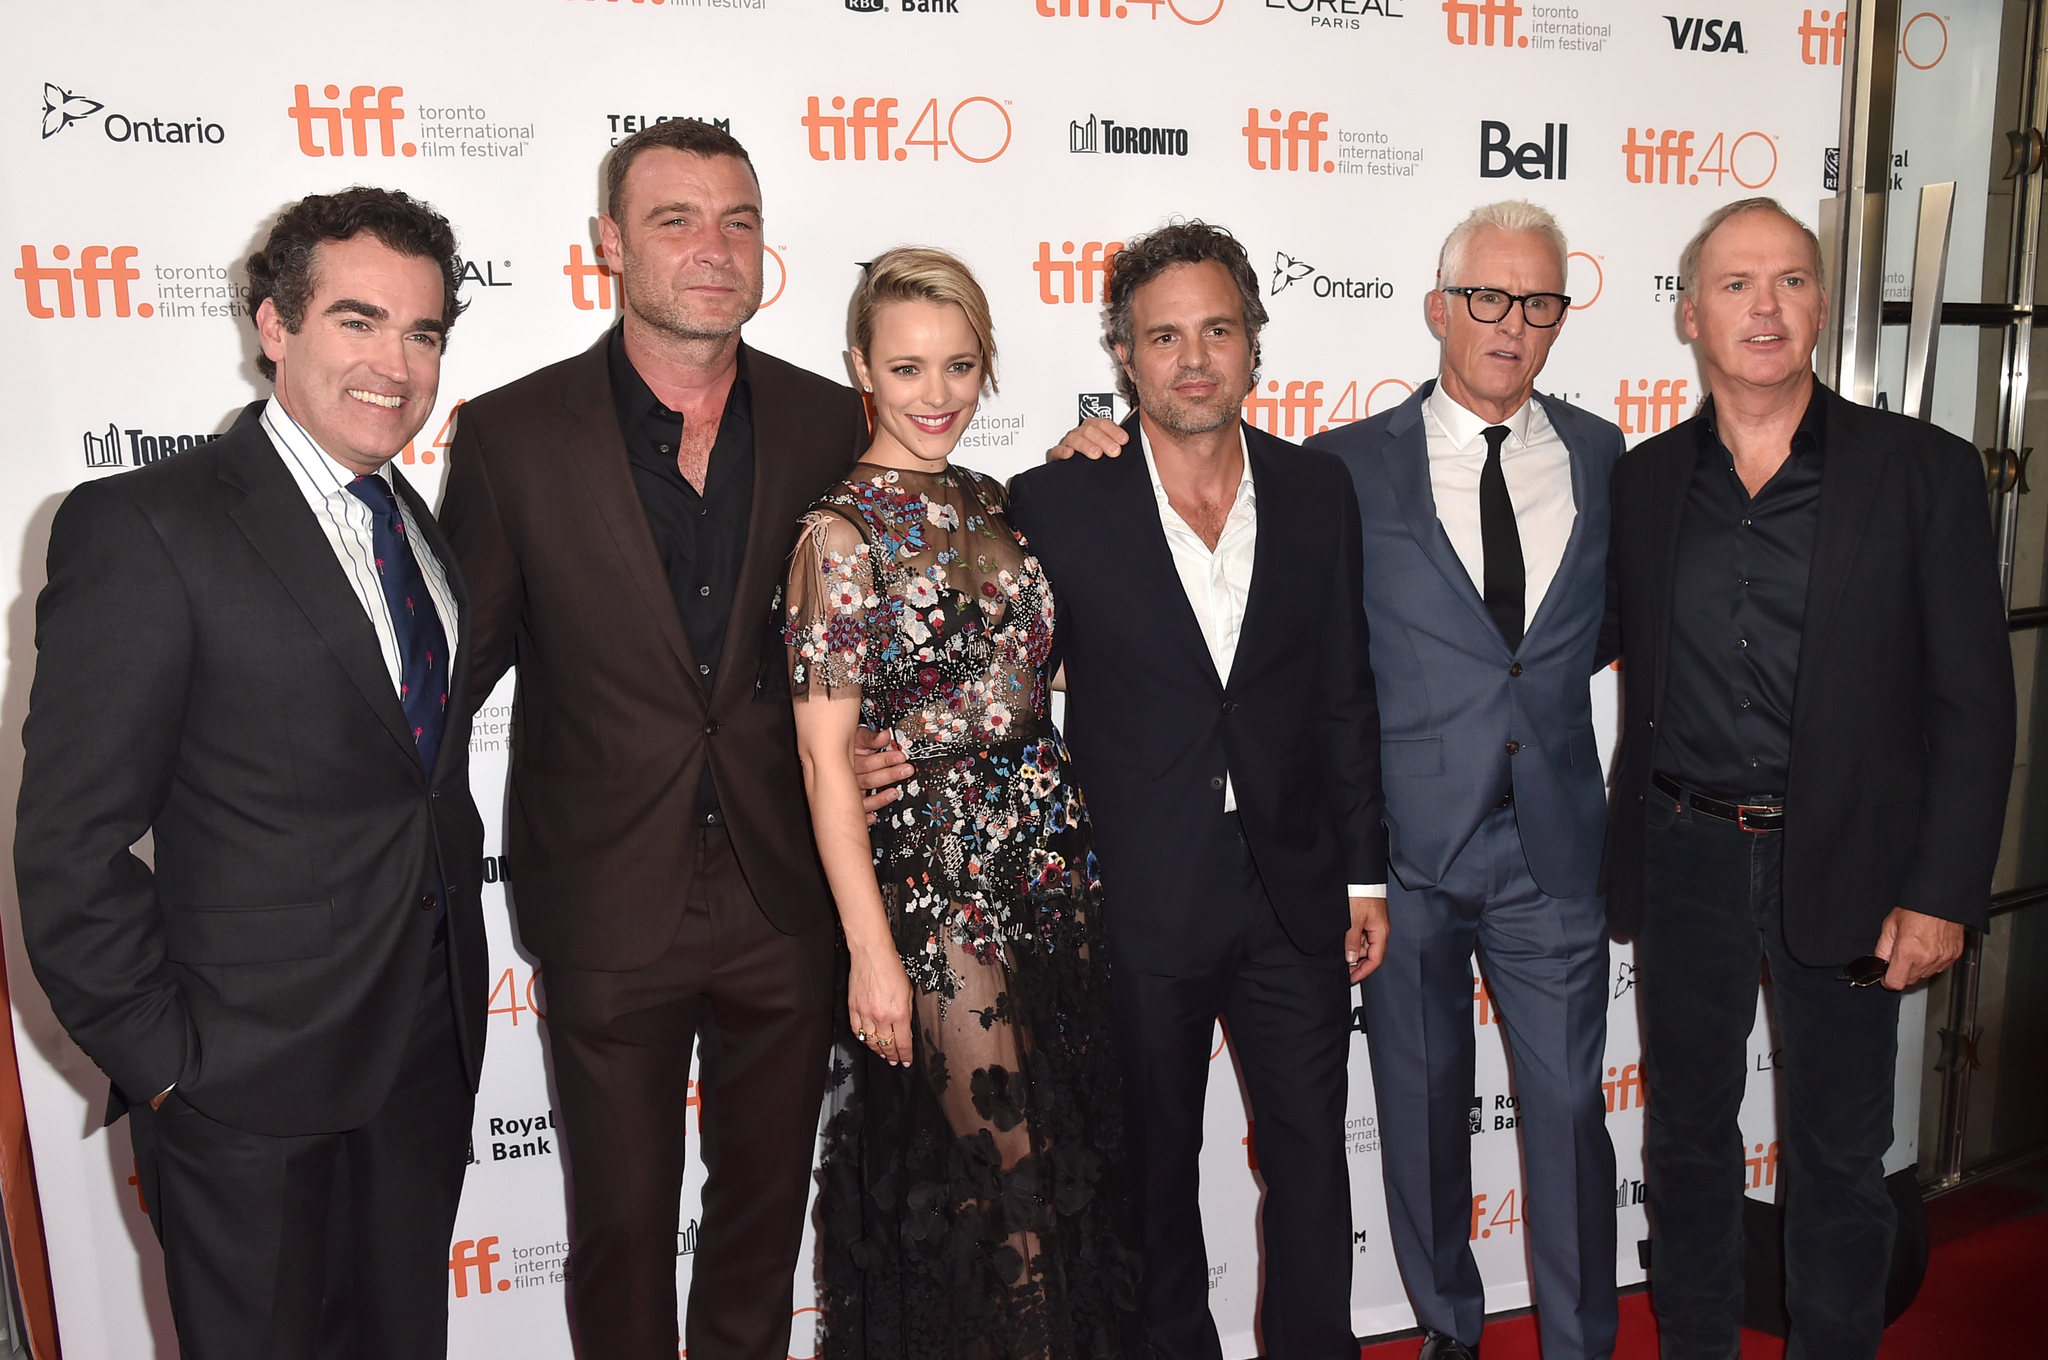 Michael Keaton, Liev Schreiber, Mark Ruffalo, John Slattery, Rachel McAdams and Brian D'Arcy at event of Spotlight (2015)